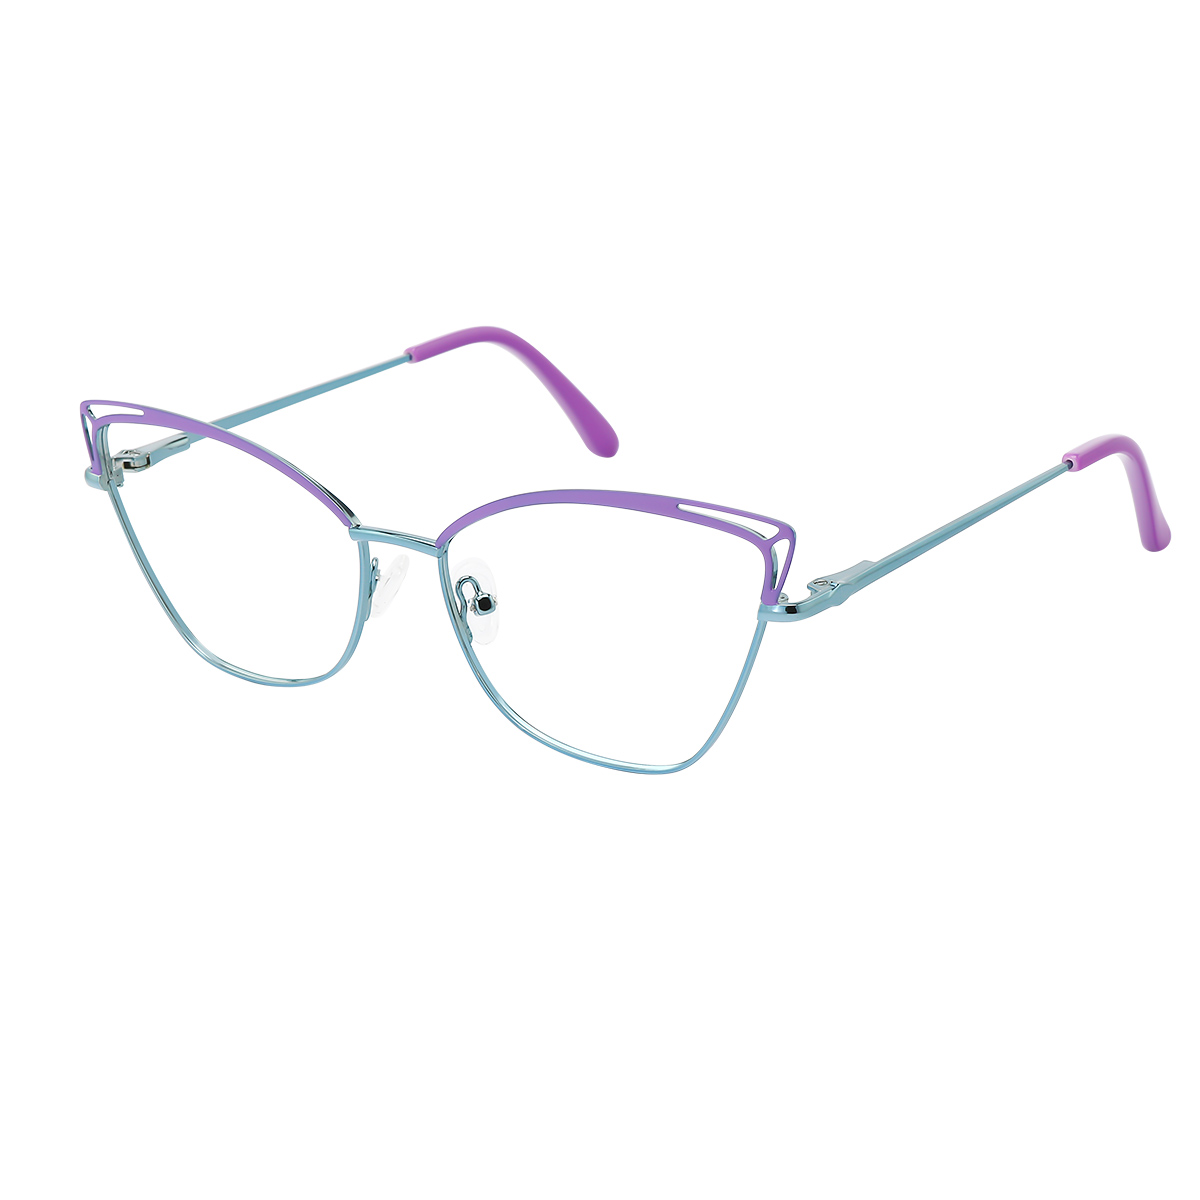 Ellen - Cat-eye Blue/Purple Reading Glasses for Women